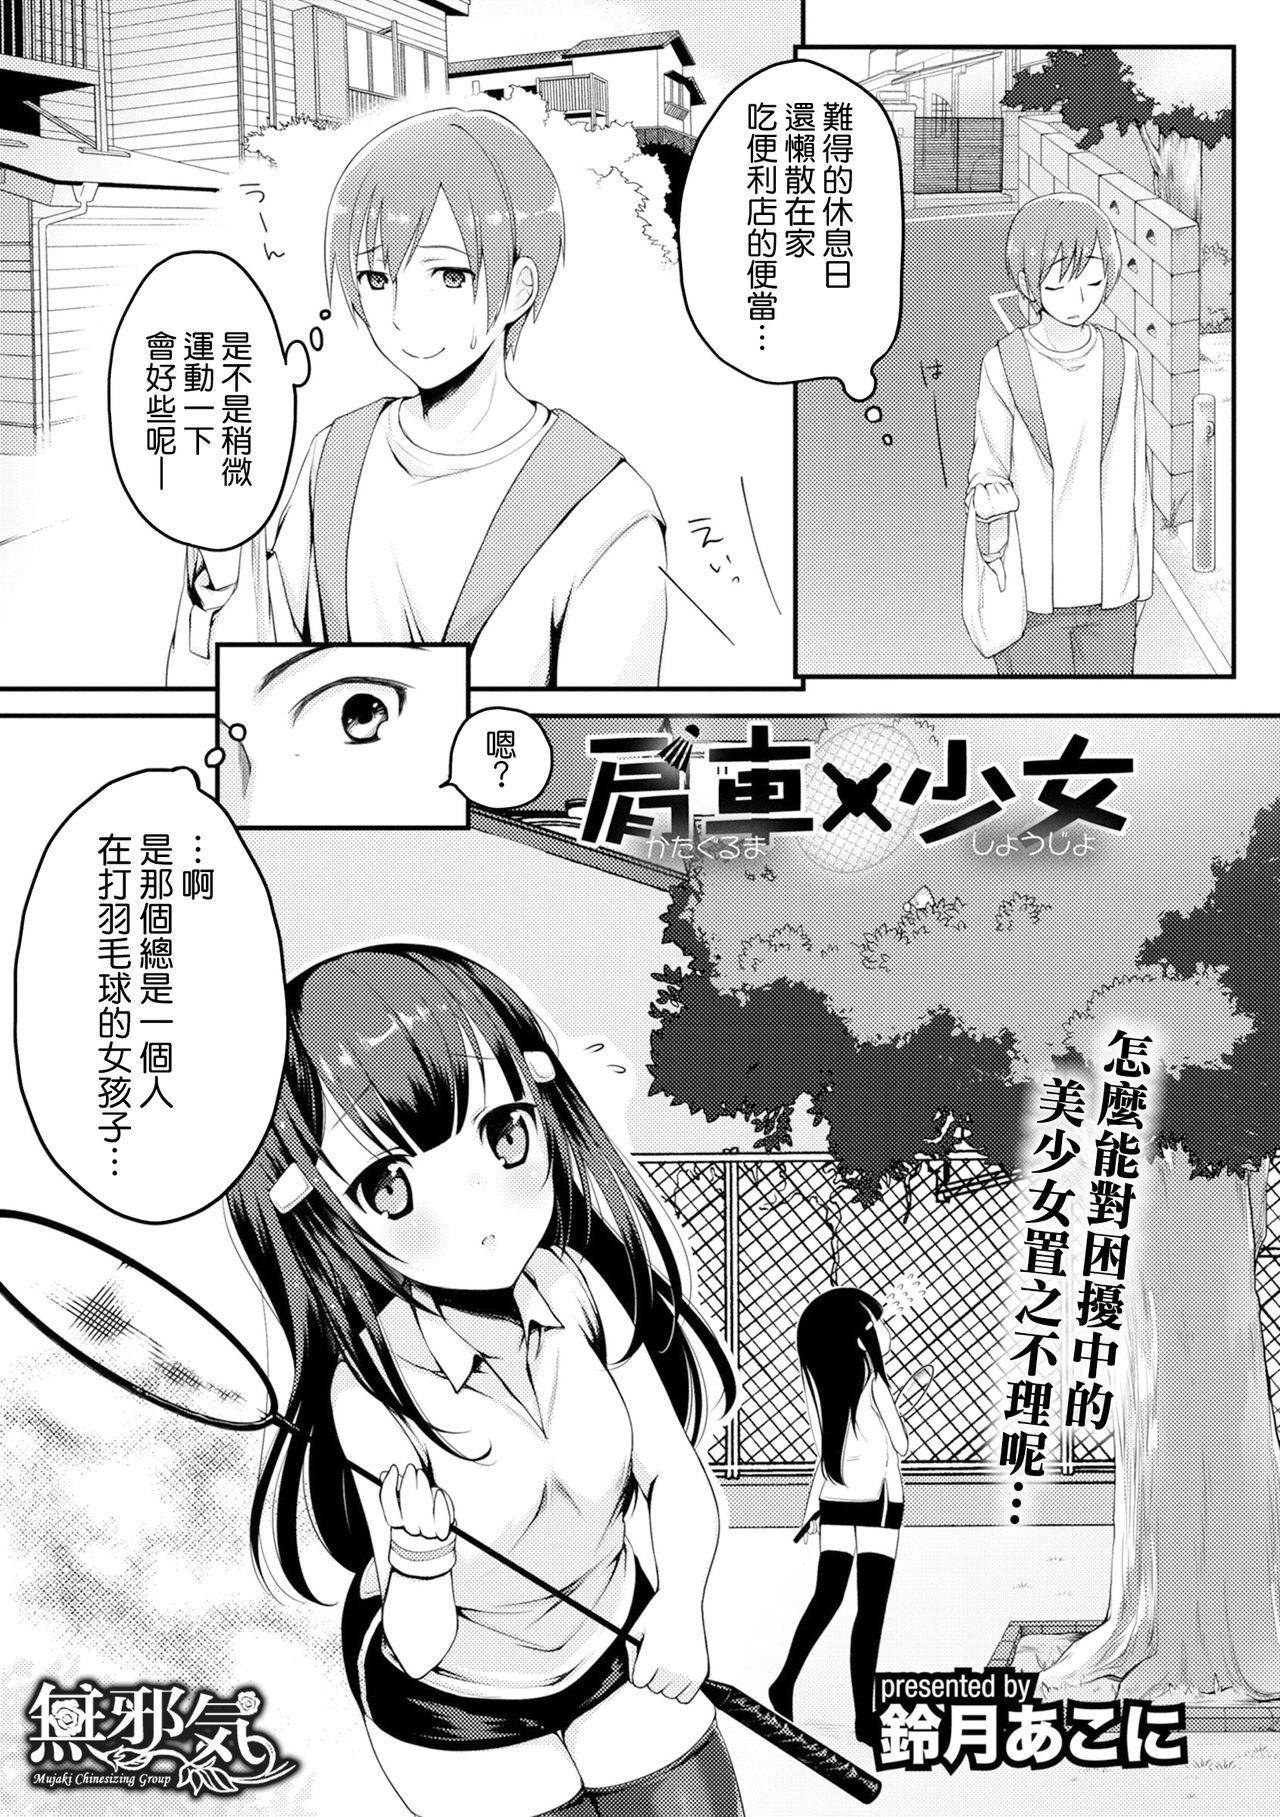 Classy Kataguruma x Shoujo Humiliation Pov - Page 1